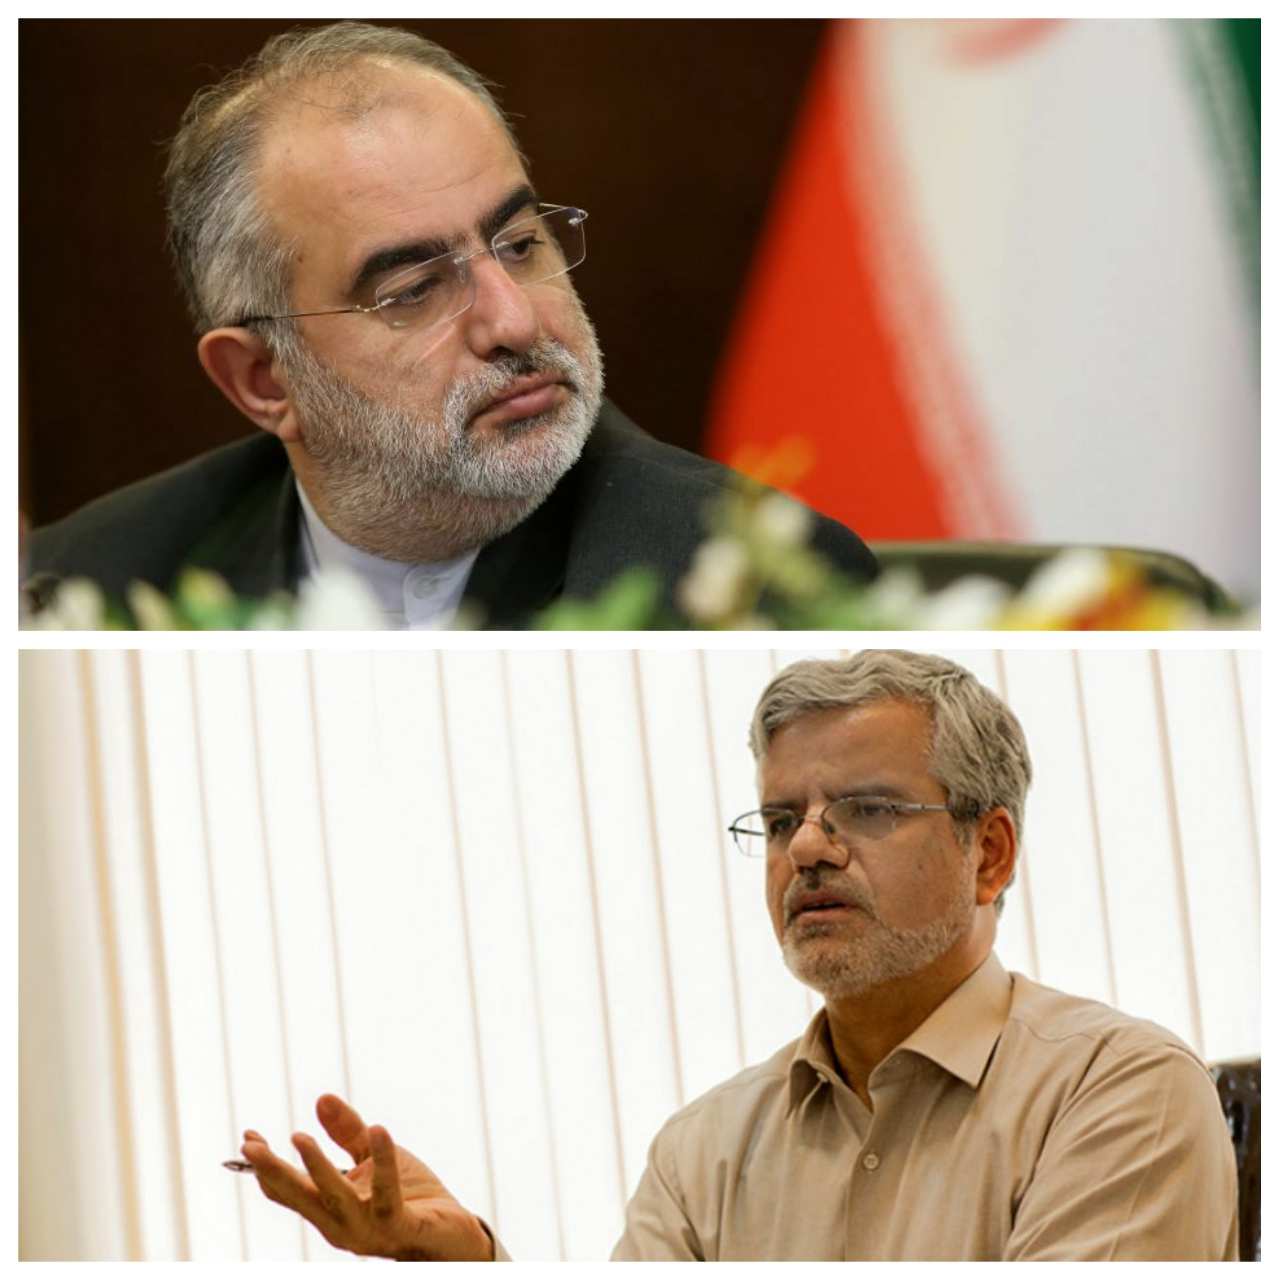 محمود صادقی و حسام الیدن آشنا,اخبار سیاسی,خبرهای سیاسی,اخبار سیاسی ایران